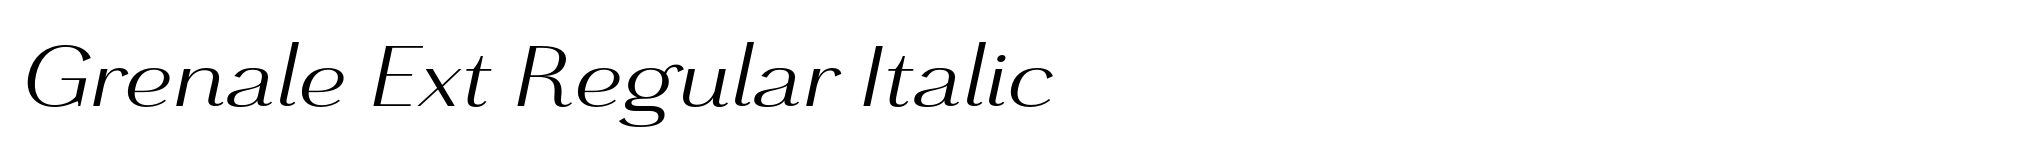 Grenale Ext Regular Italic image